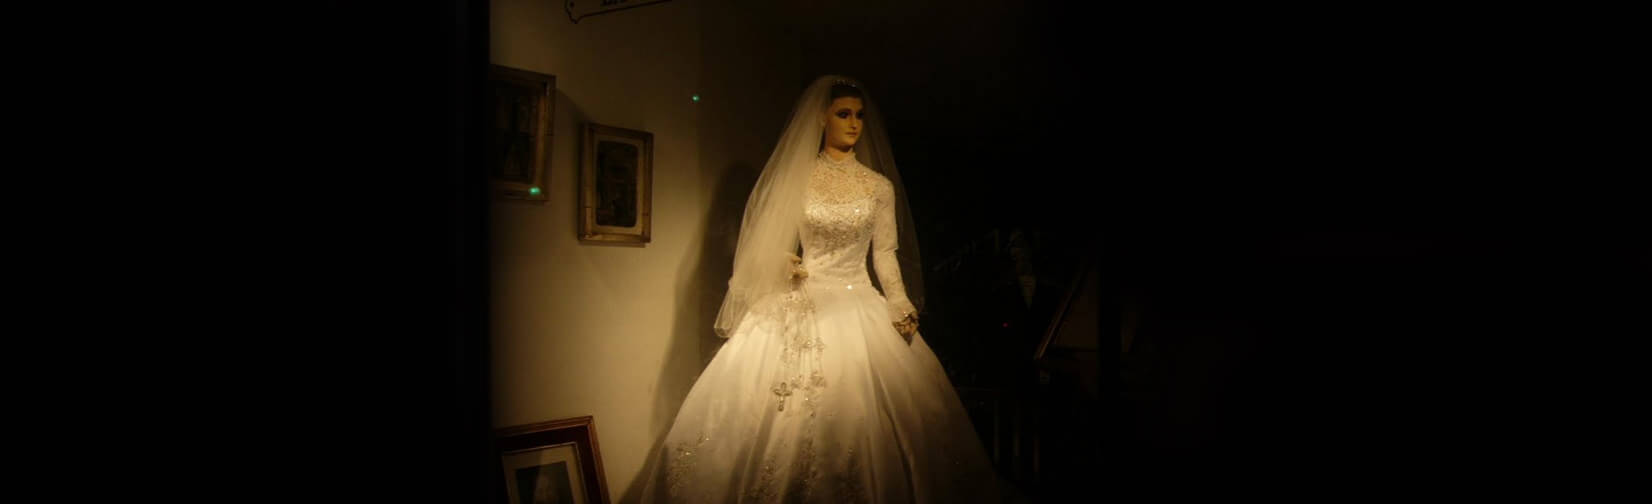 bridal-shop-wedding-dress-model